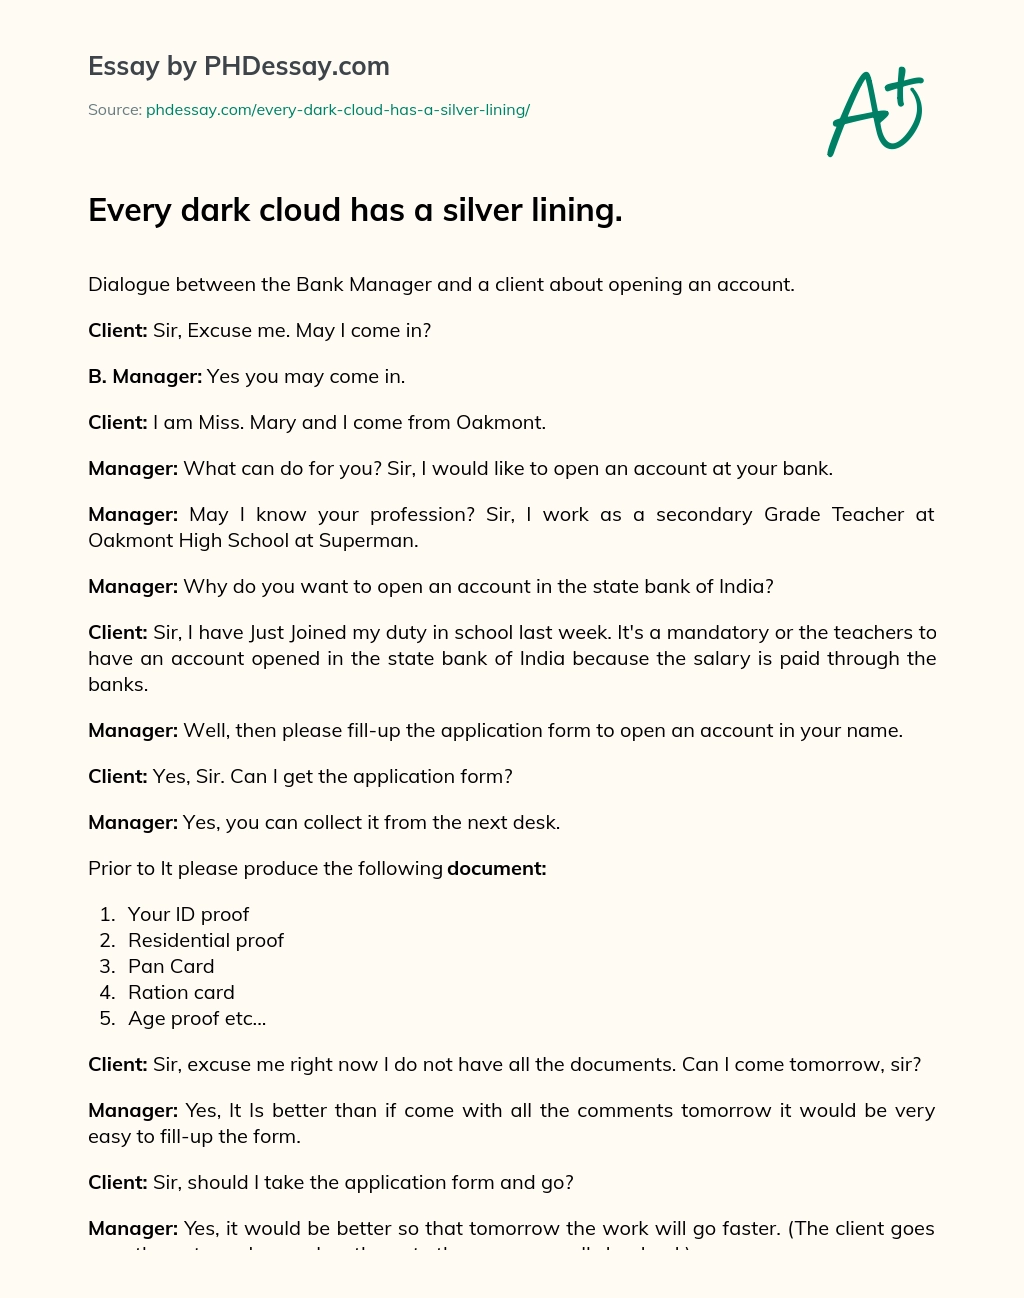 Every dark cloud has a silver lining. essay